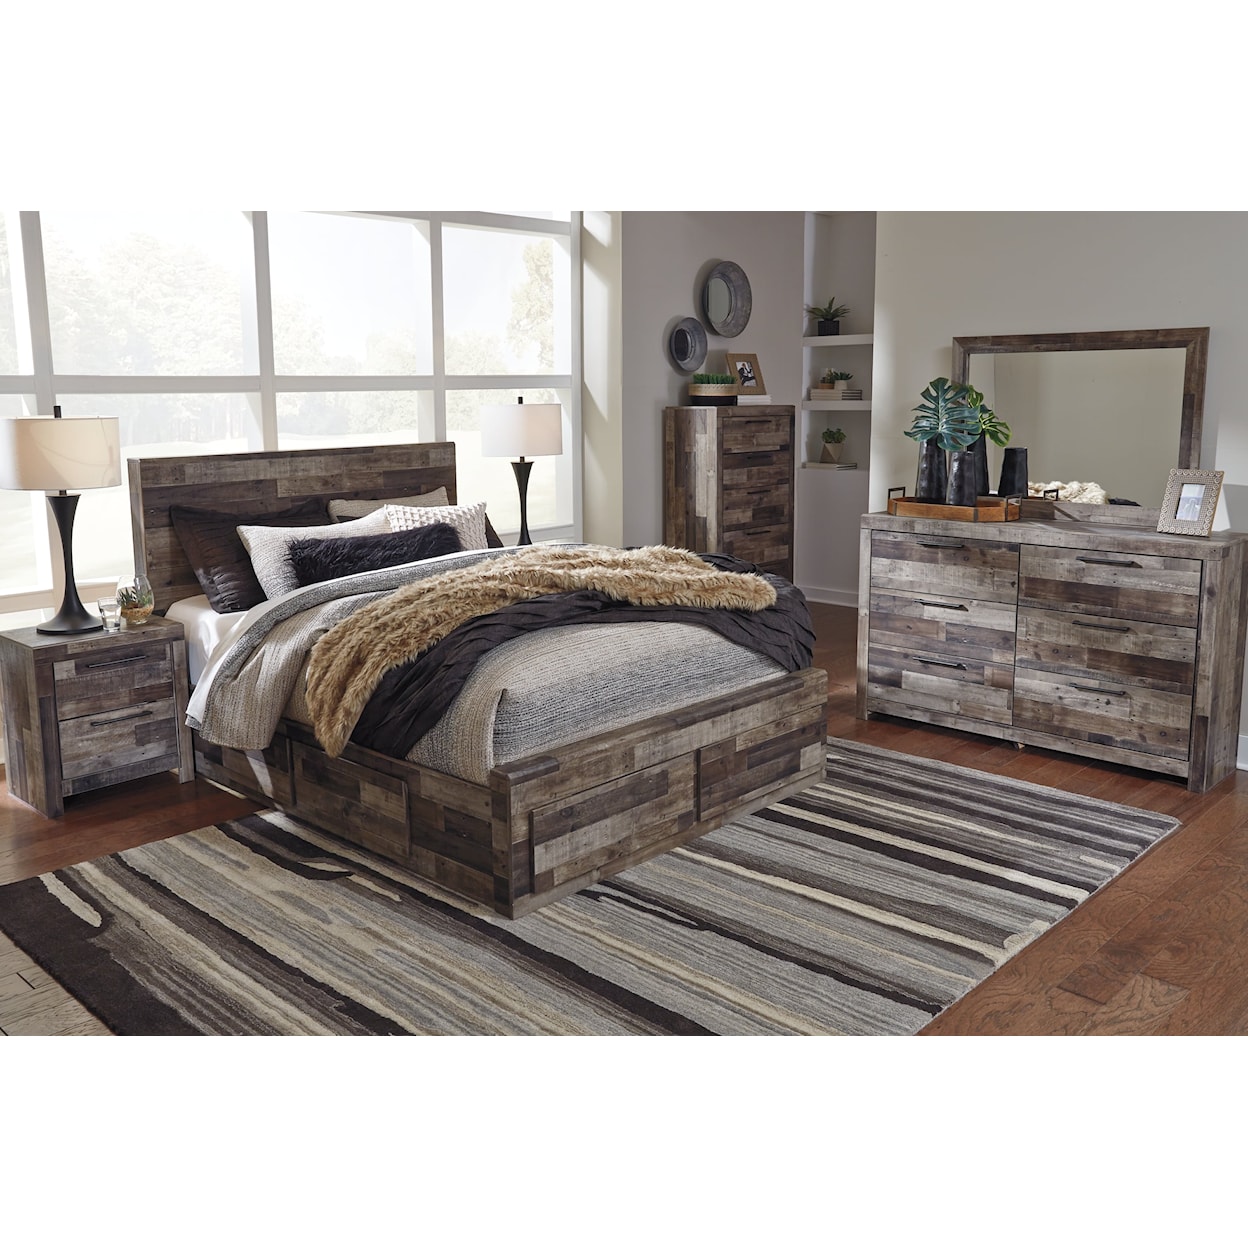 Ashley Furniture Benchcraft Derekson Queen Panel Bed with 4 Storage Drawers